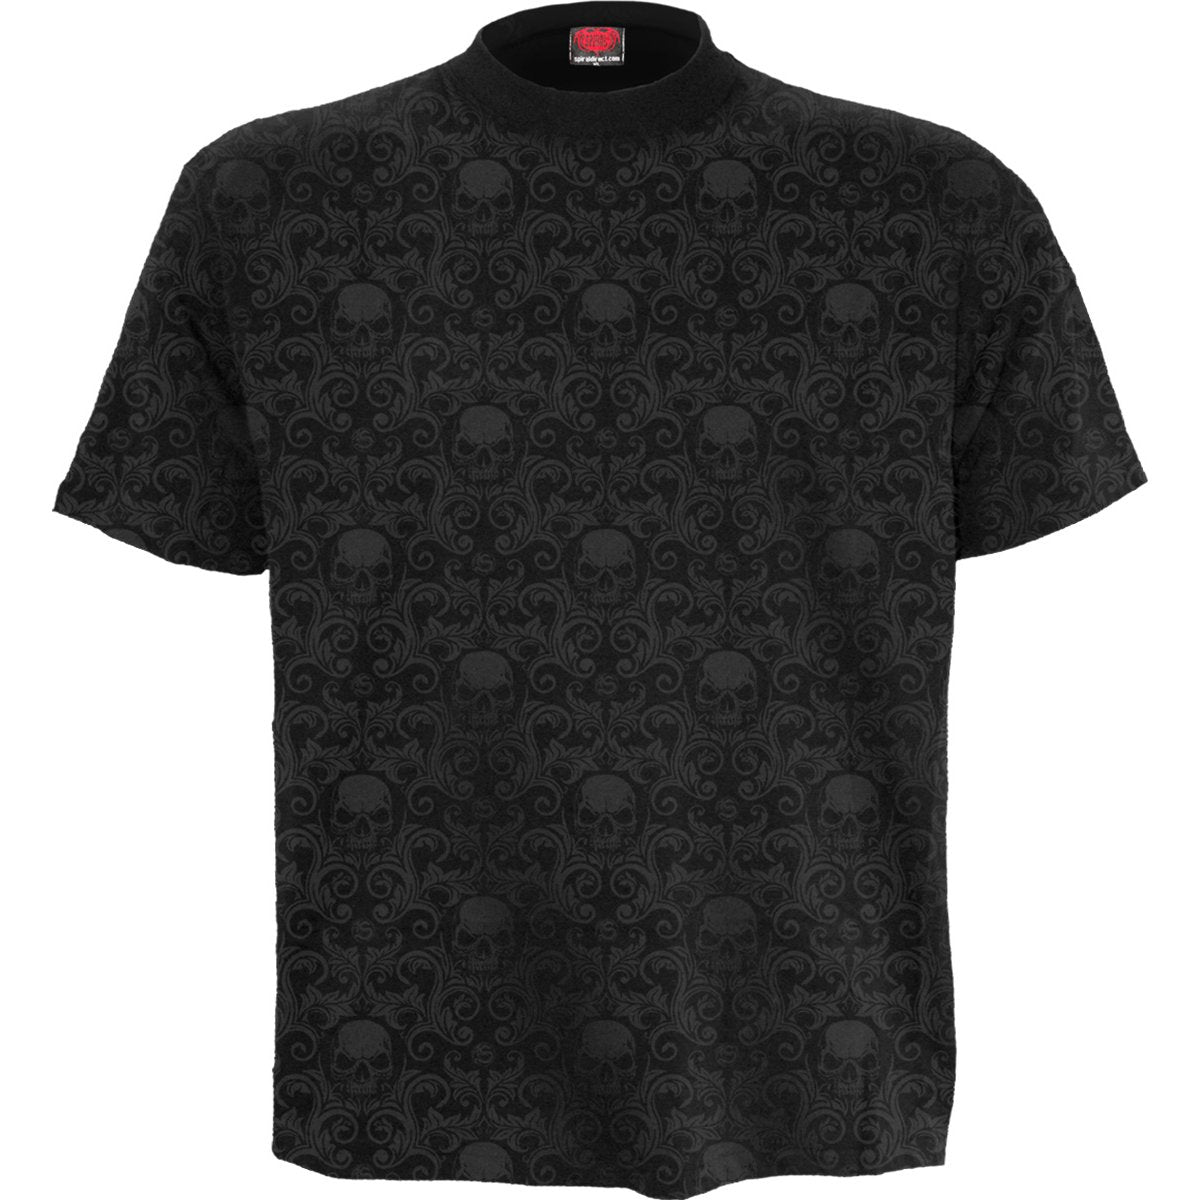 URBAN FASHION - Scroll Impression T-Shirt - Spiral USA